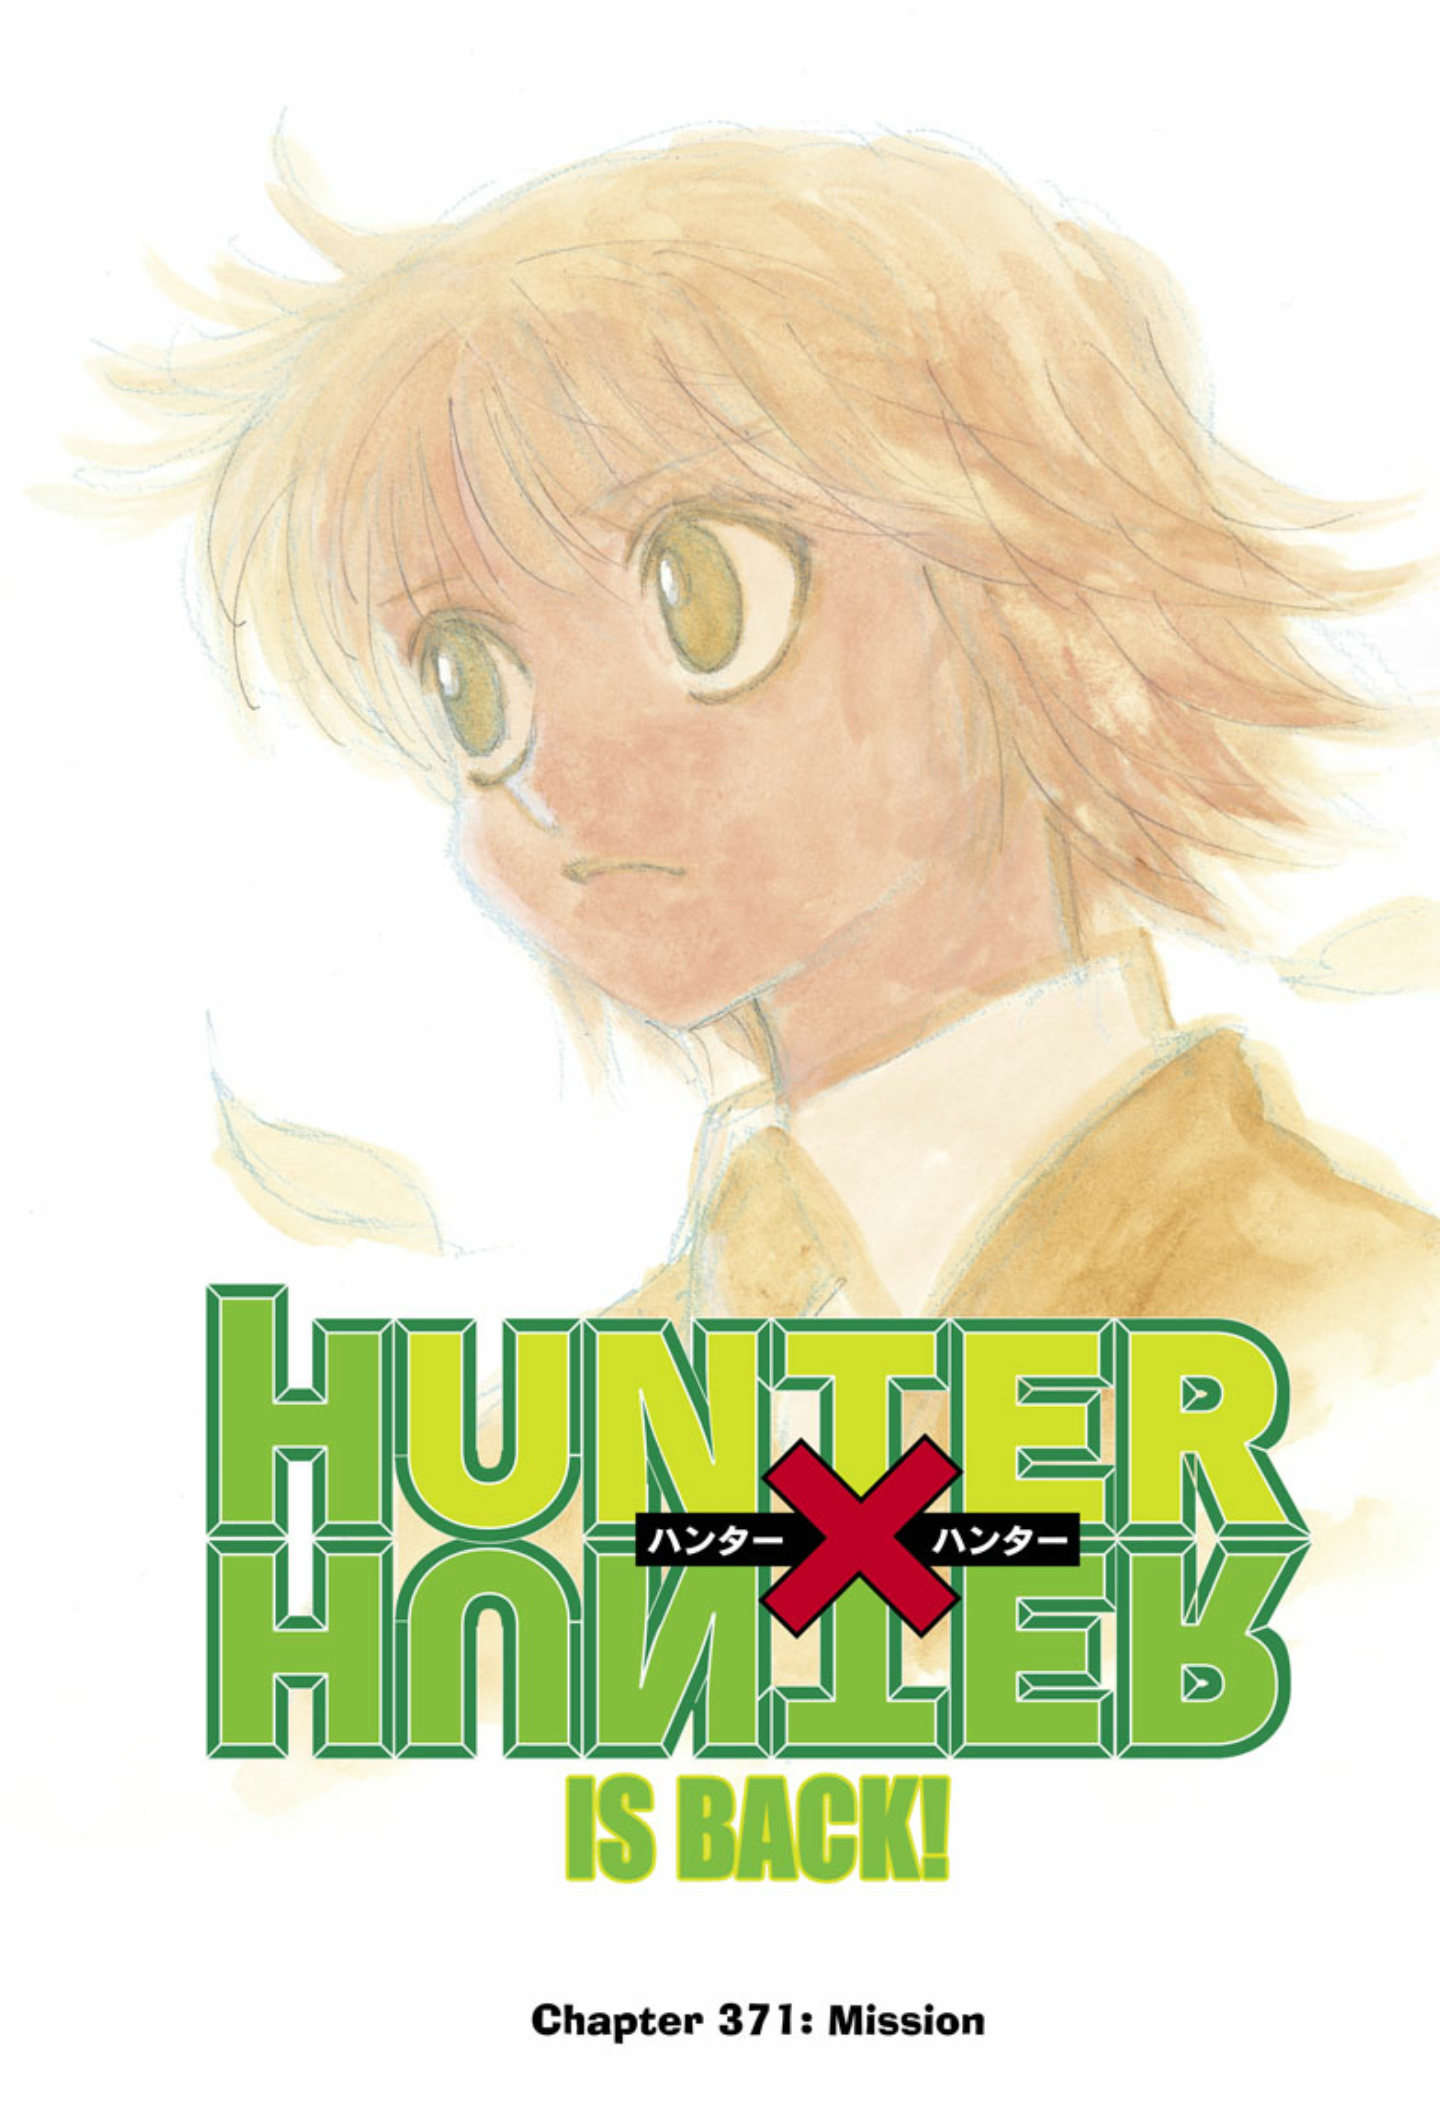 Chapter 371 Hunterpedia Fandom